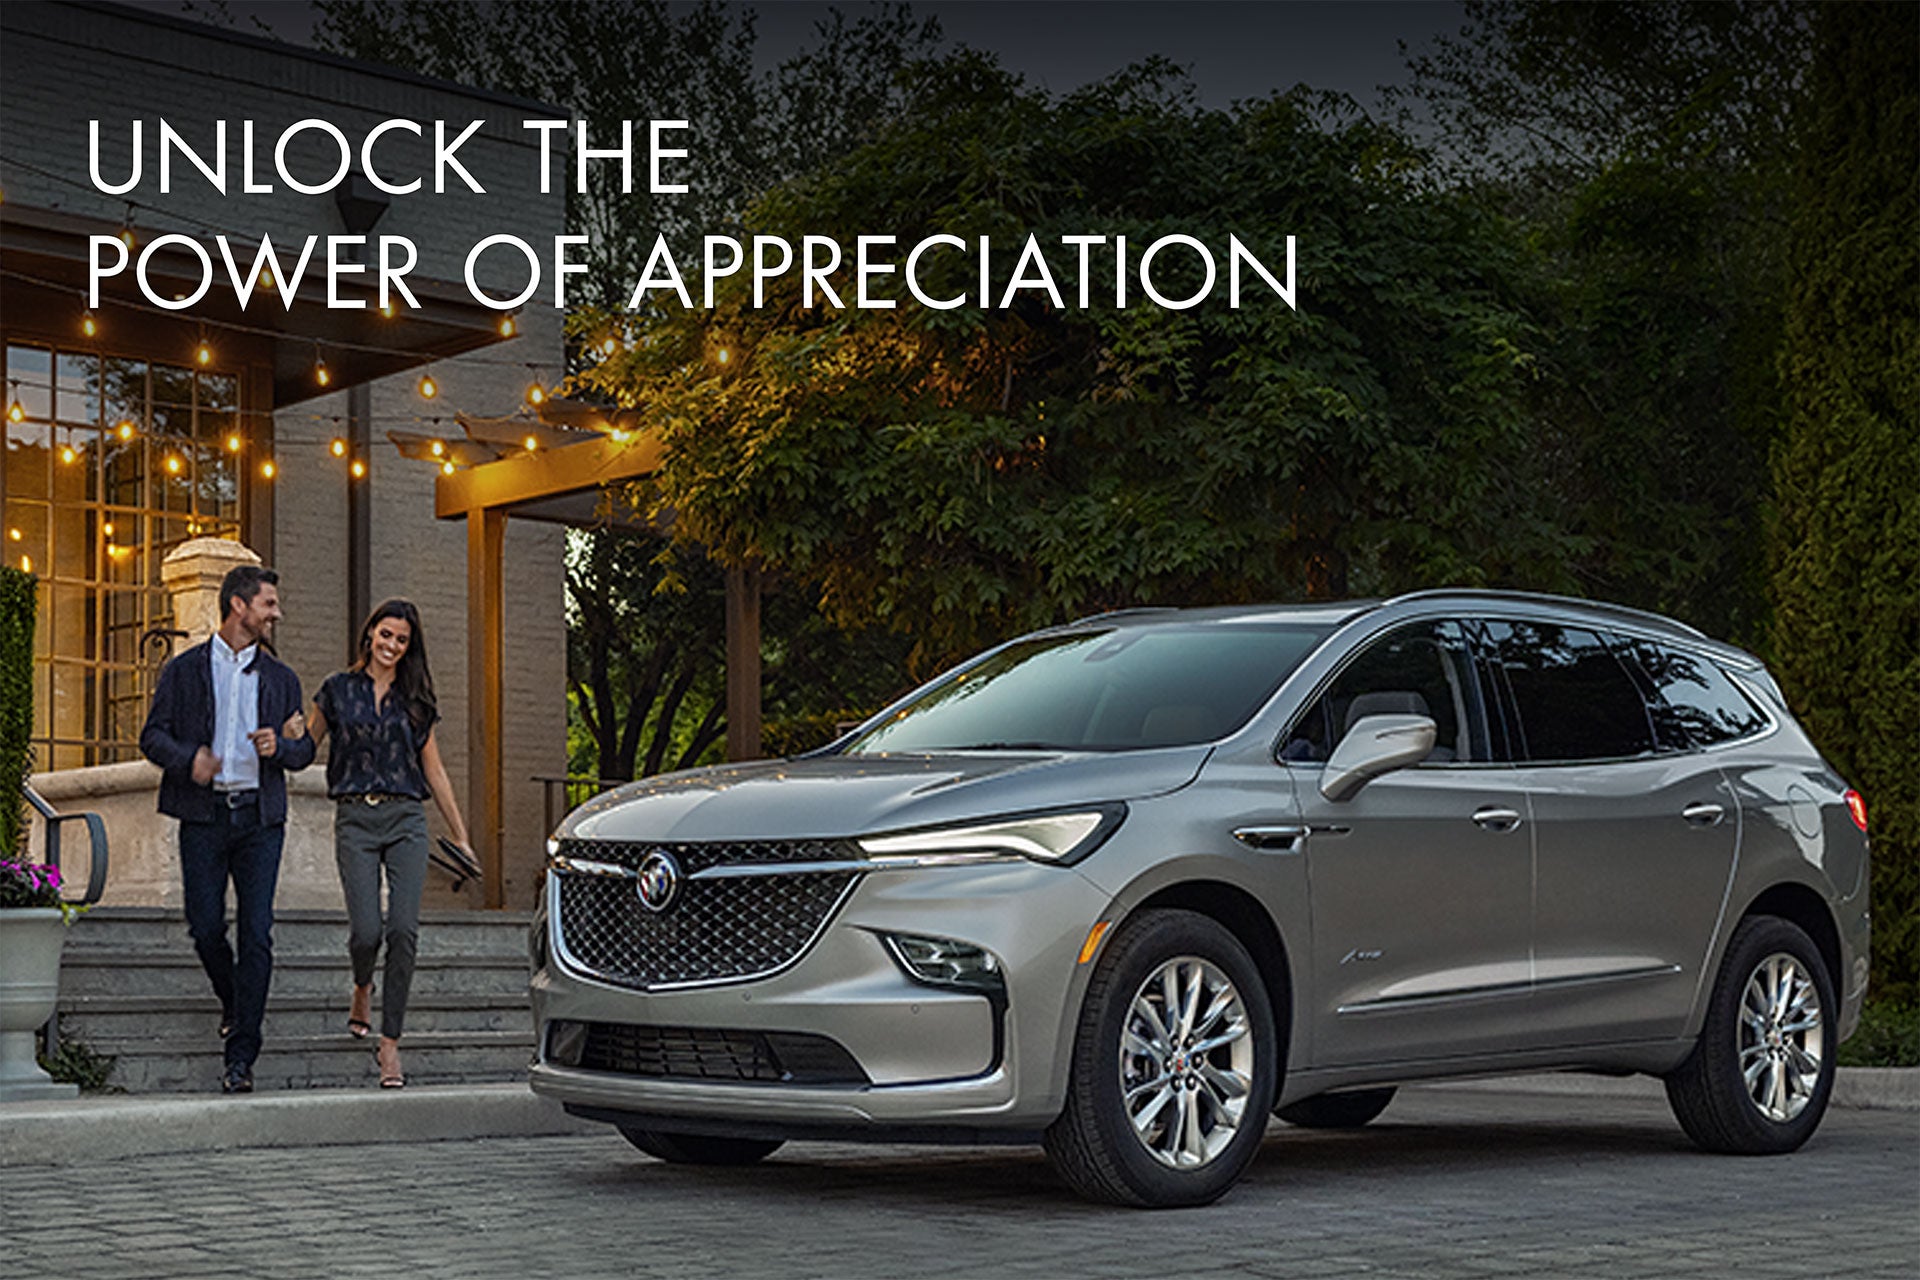 Unlock the power of appreciation | Tom Davis Chevrolet Buick GMC in Parsons KS